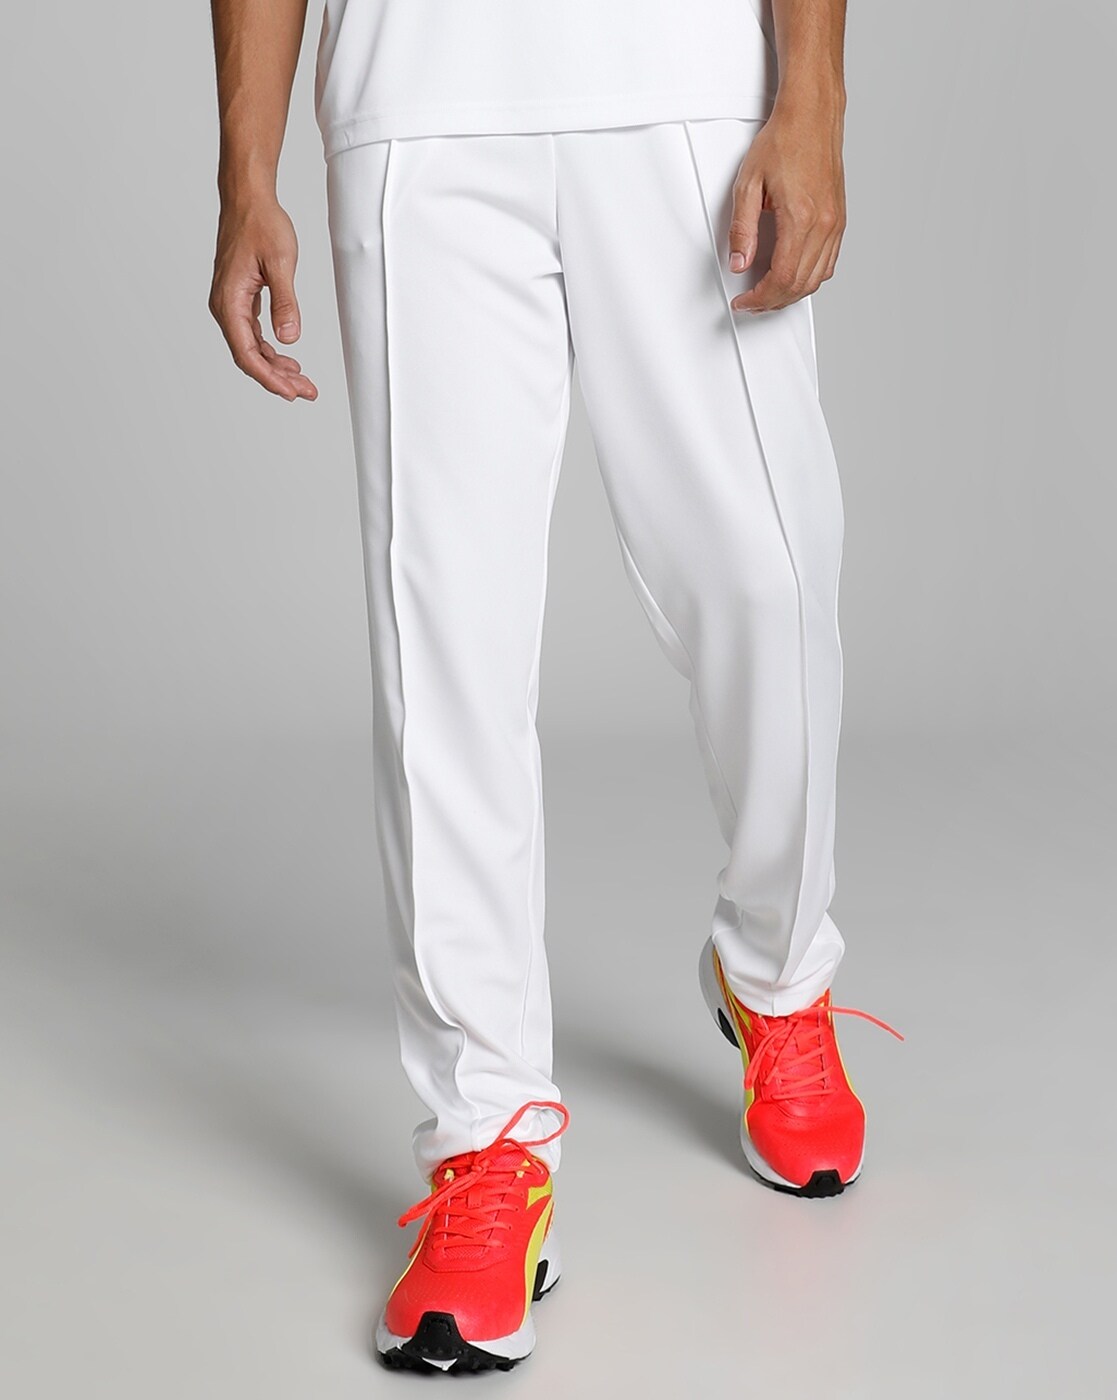 Buy White Track Pants for Men by NIKE Online  Ajiocom